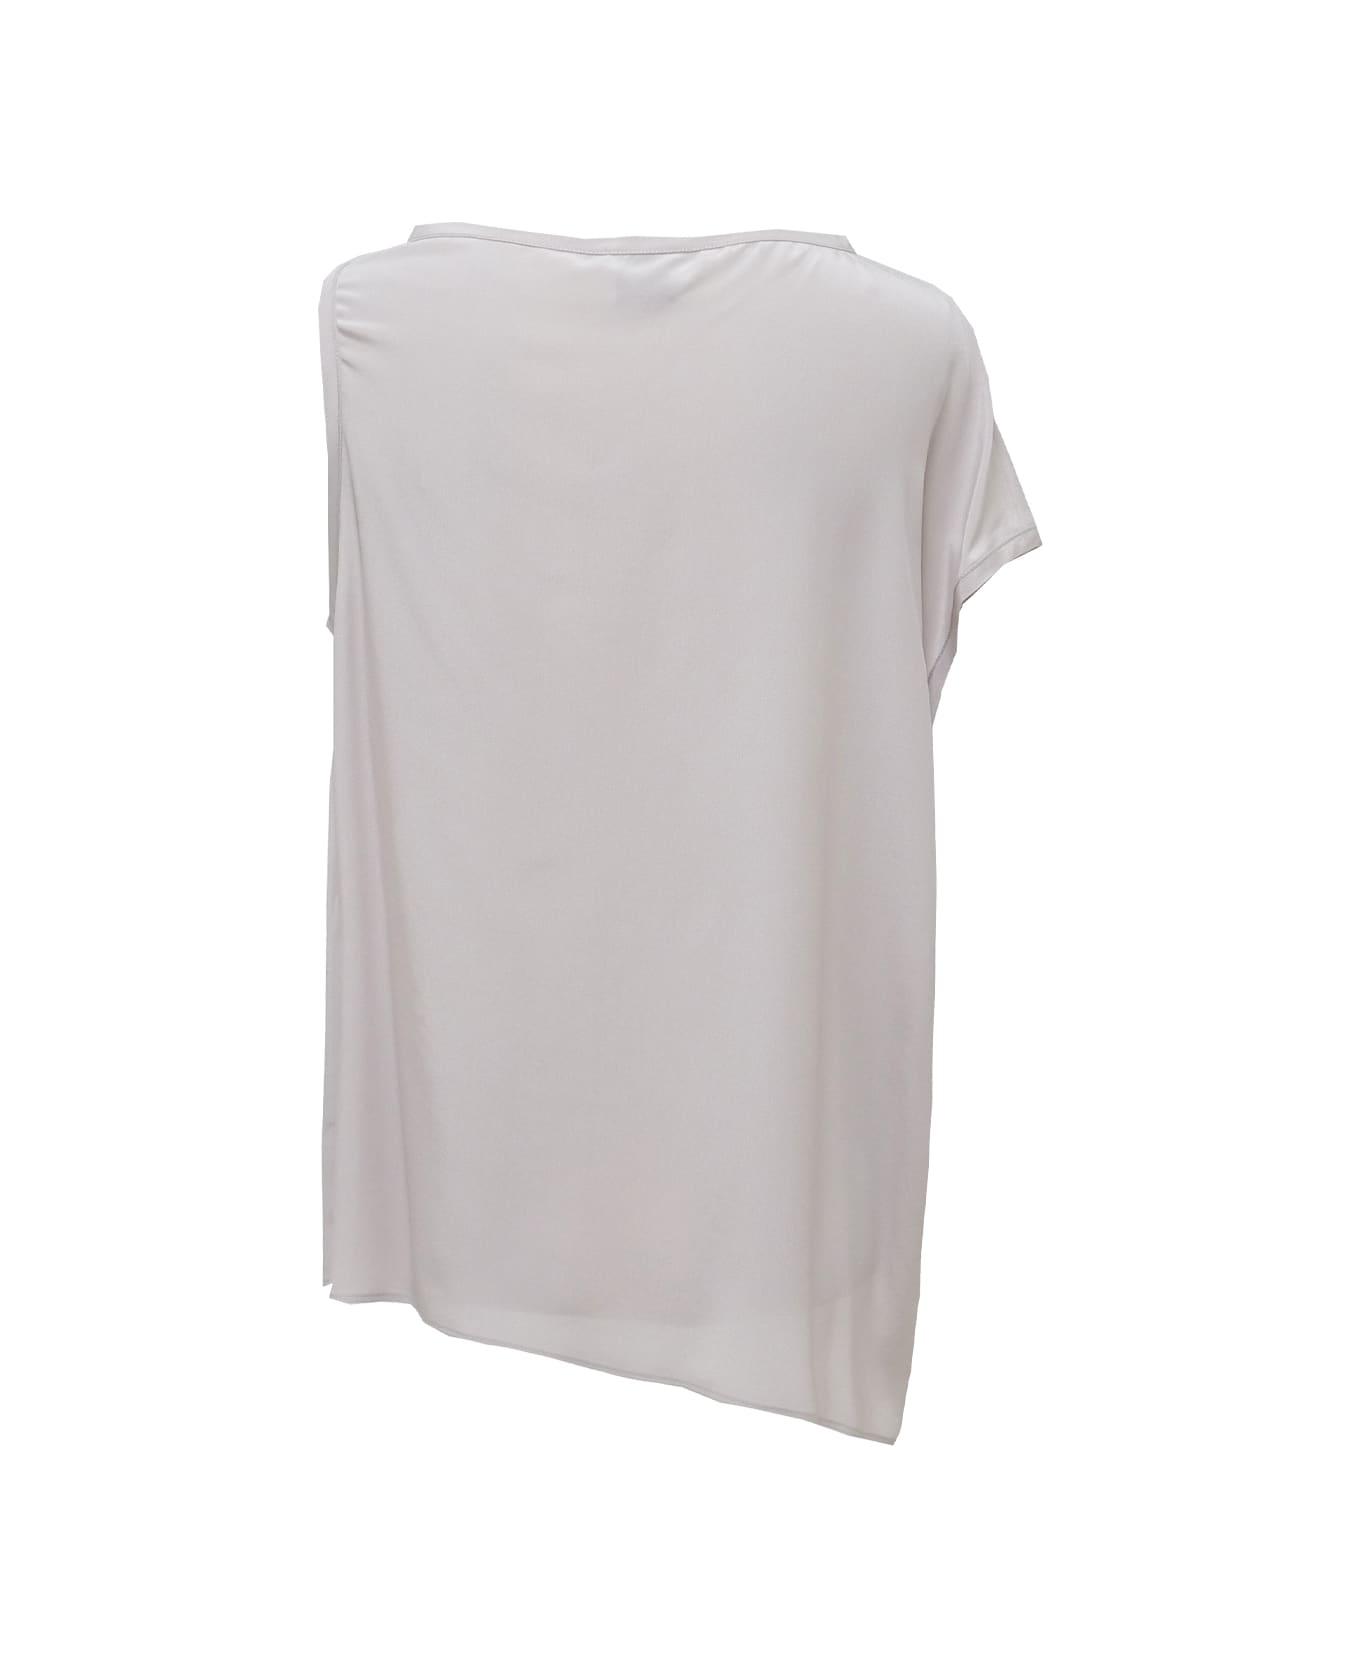 Alysi Shirt - White シャツ